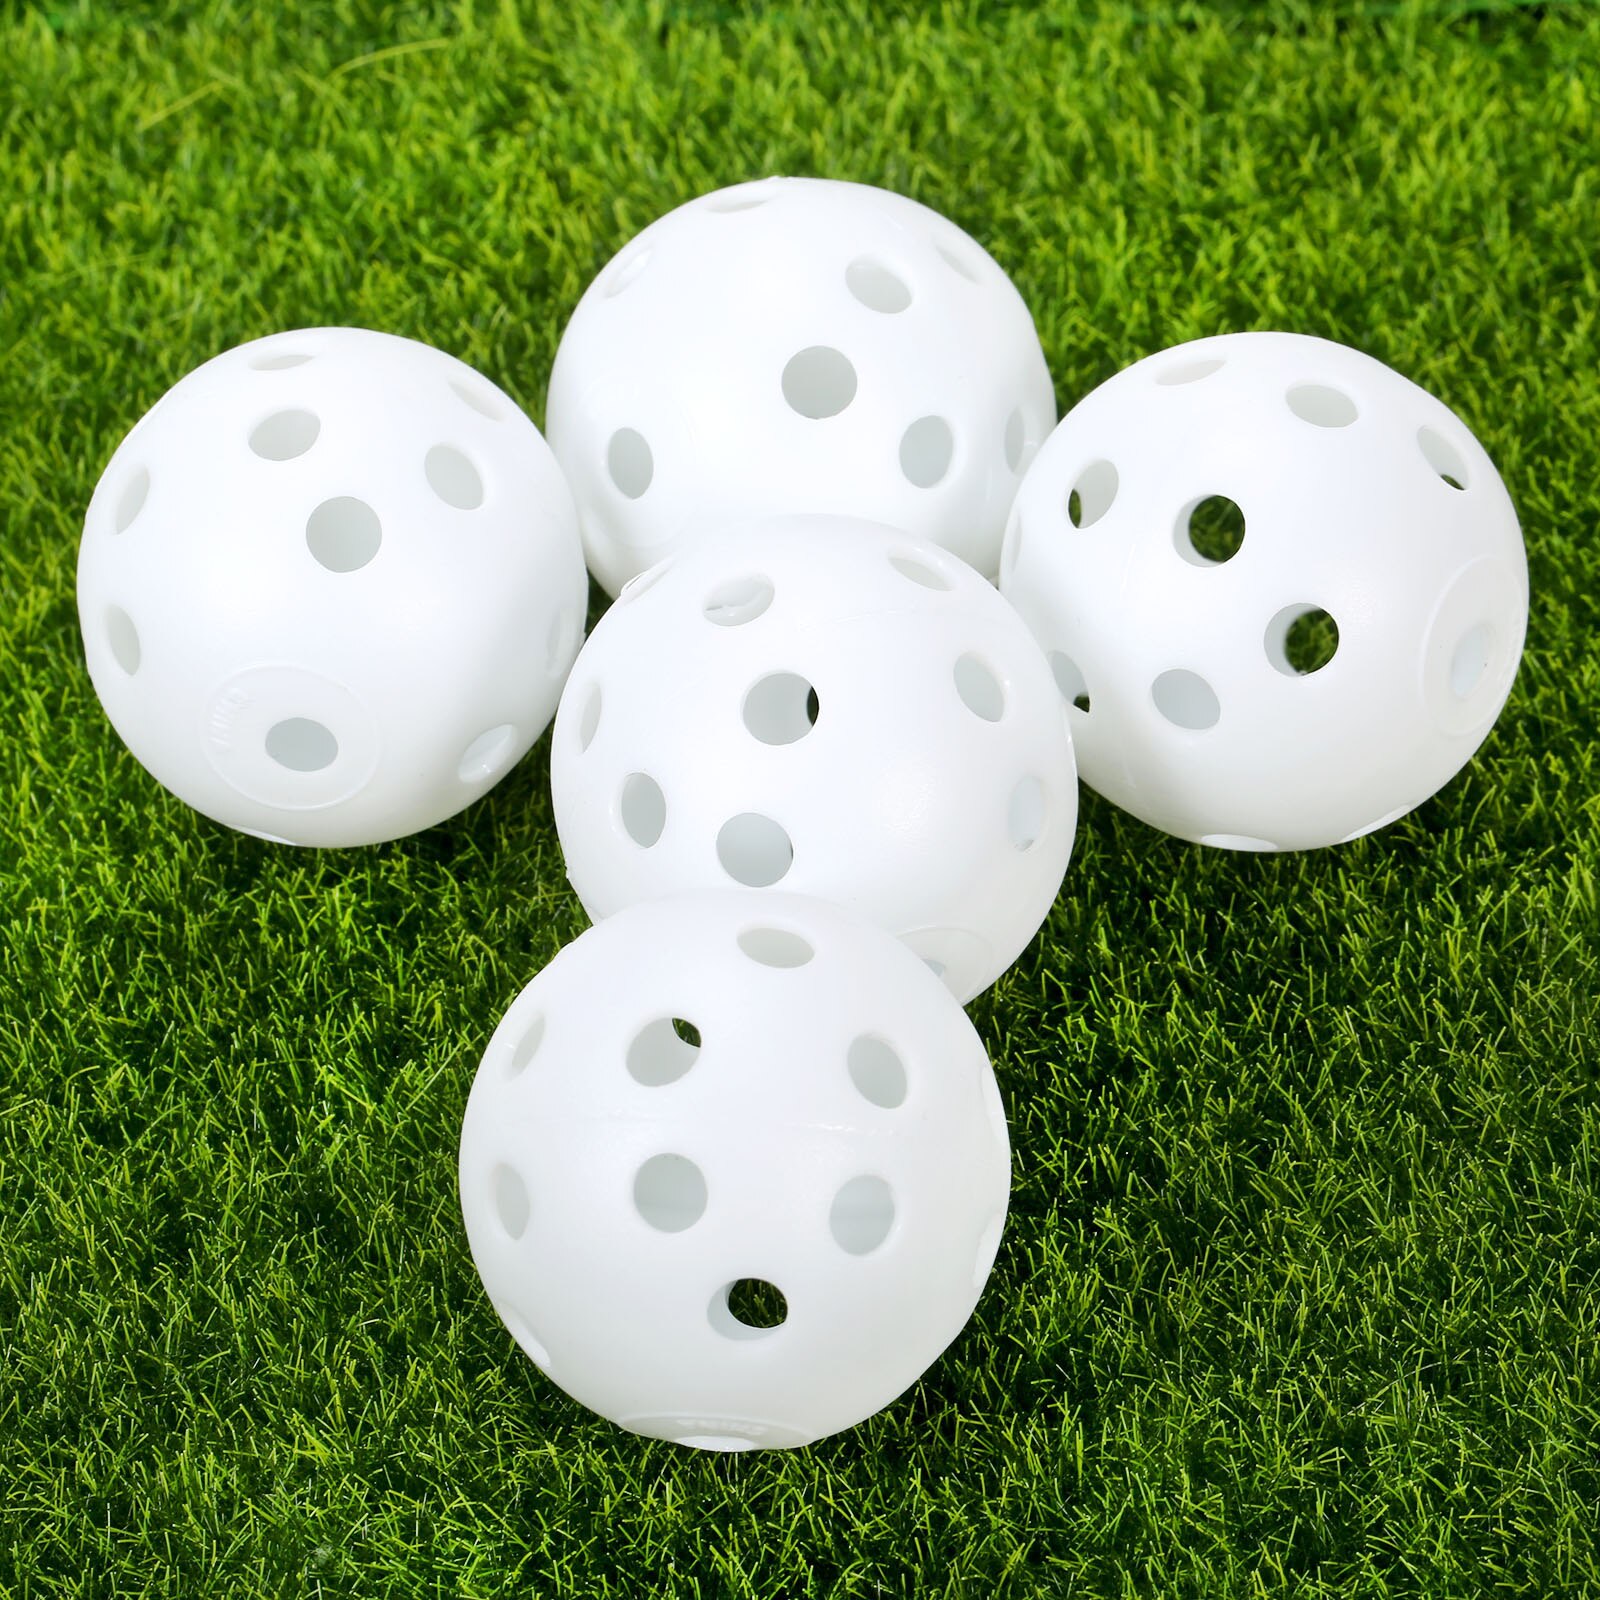 50 Stks/partij Plastic Gat Luchtstroom Hollow Golfballen 41Mm Golfer Golf Practice Ballen Golf Training Accessoires Willekeurige Kleur